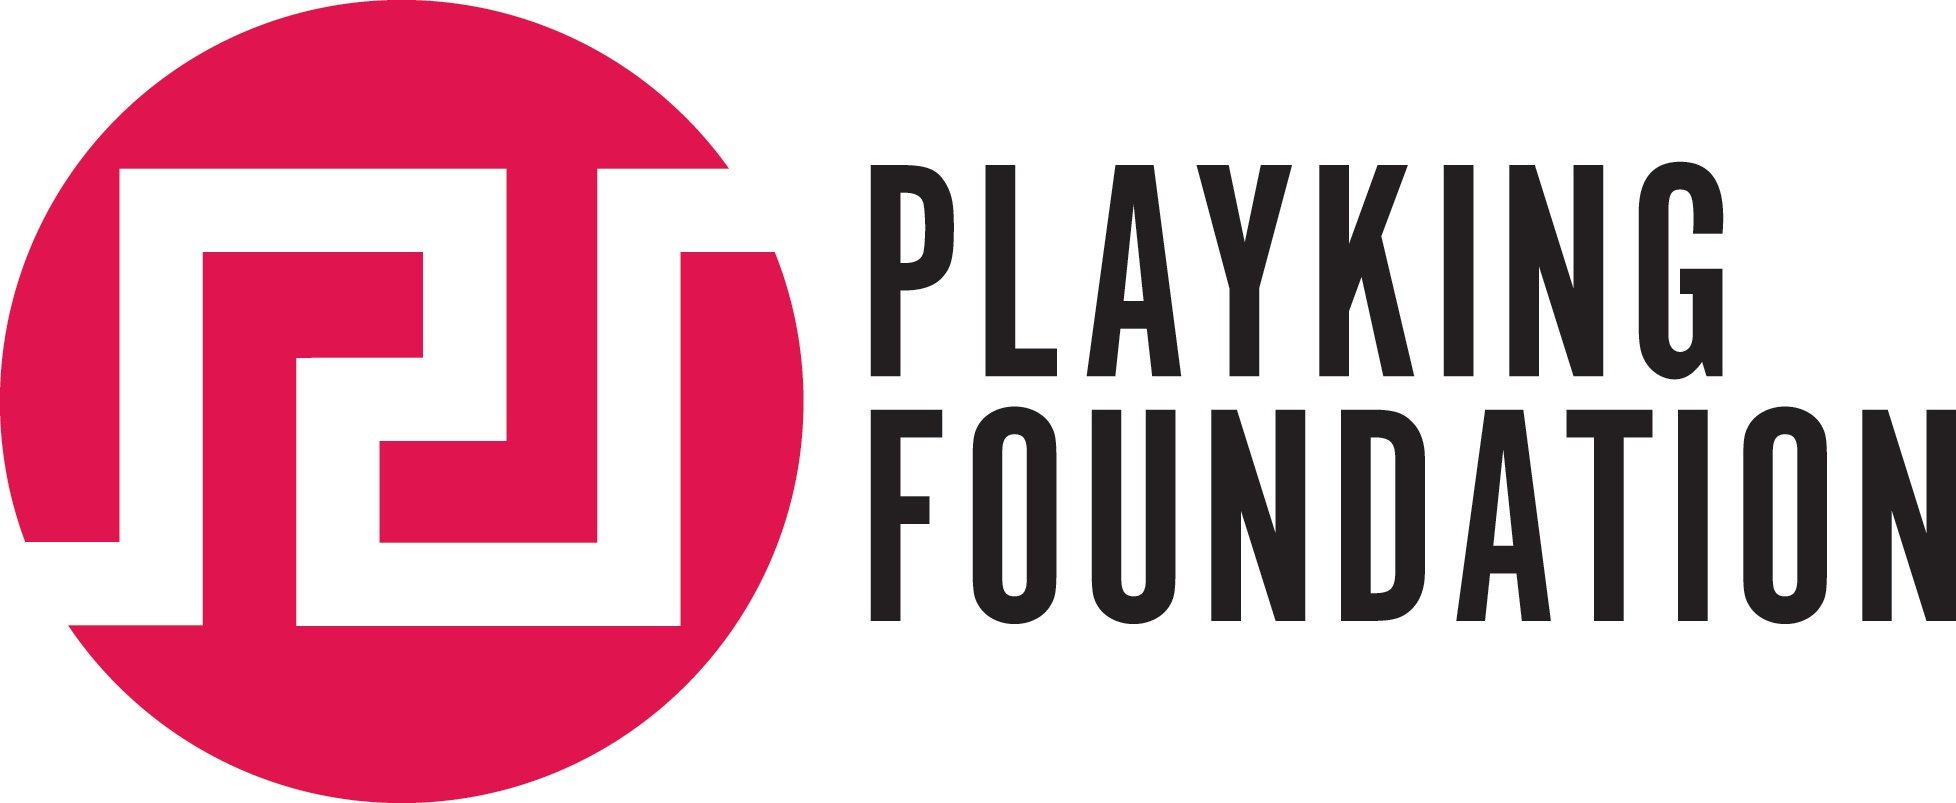 PlayKing Foundation Colour.jpg